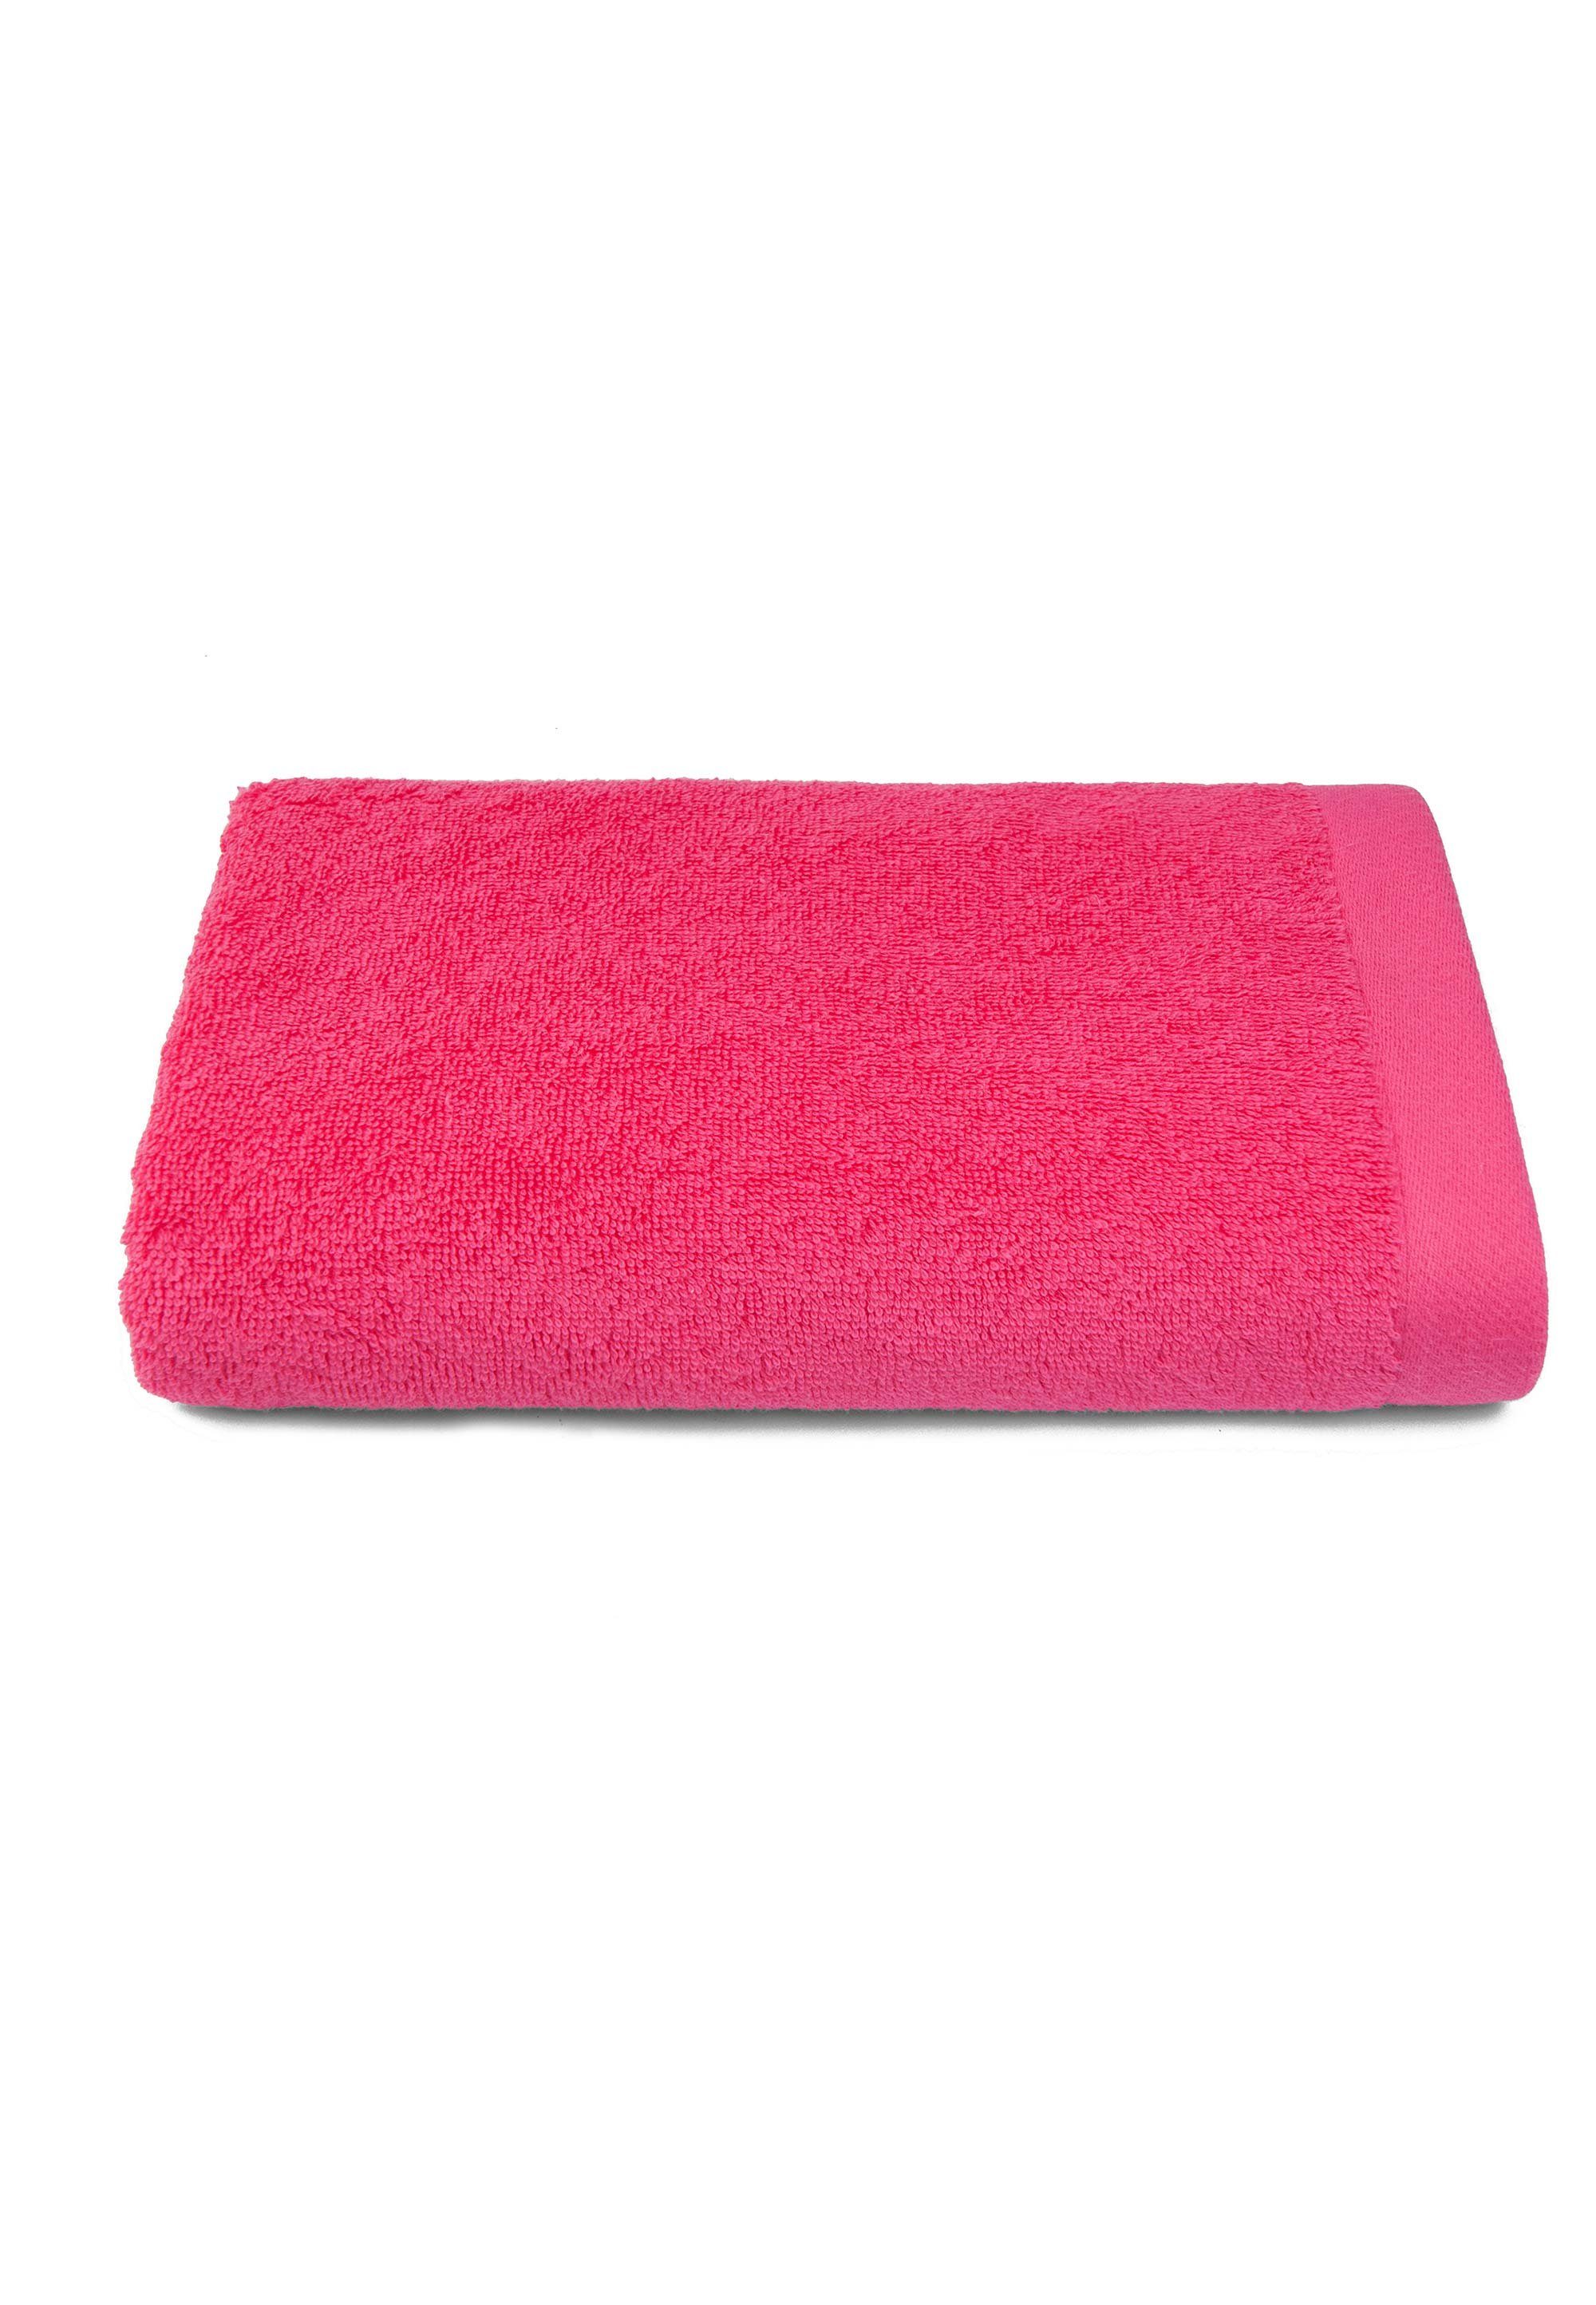 grace grand spa Handtuch Absolut, (1-St), mit kuscheligem Finish pink | Alle Handtücher